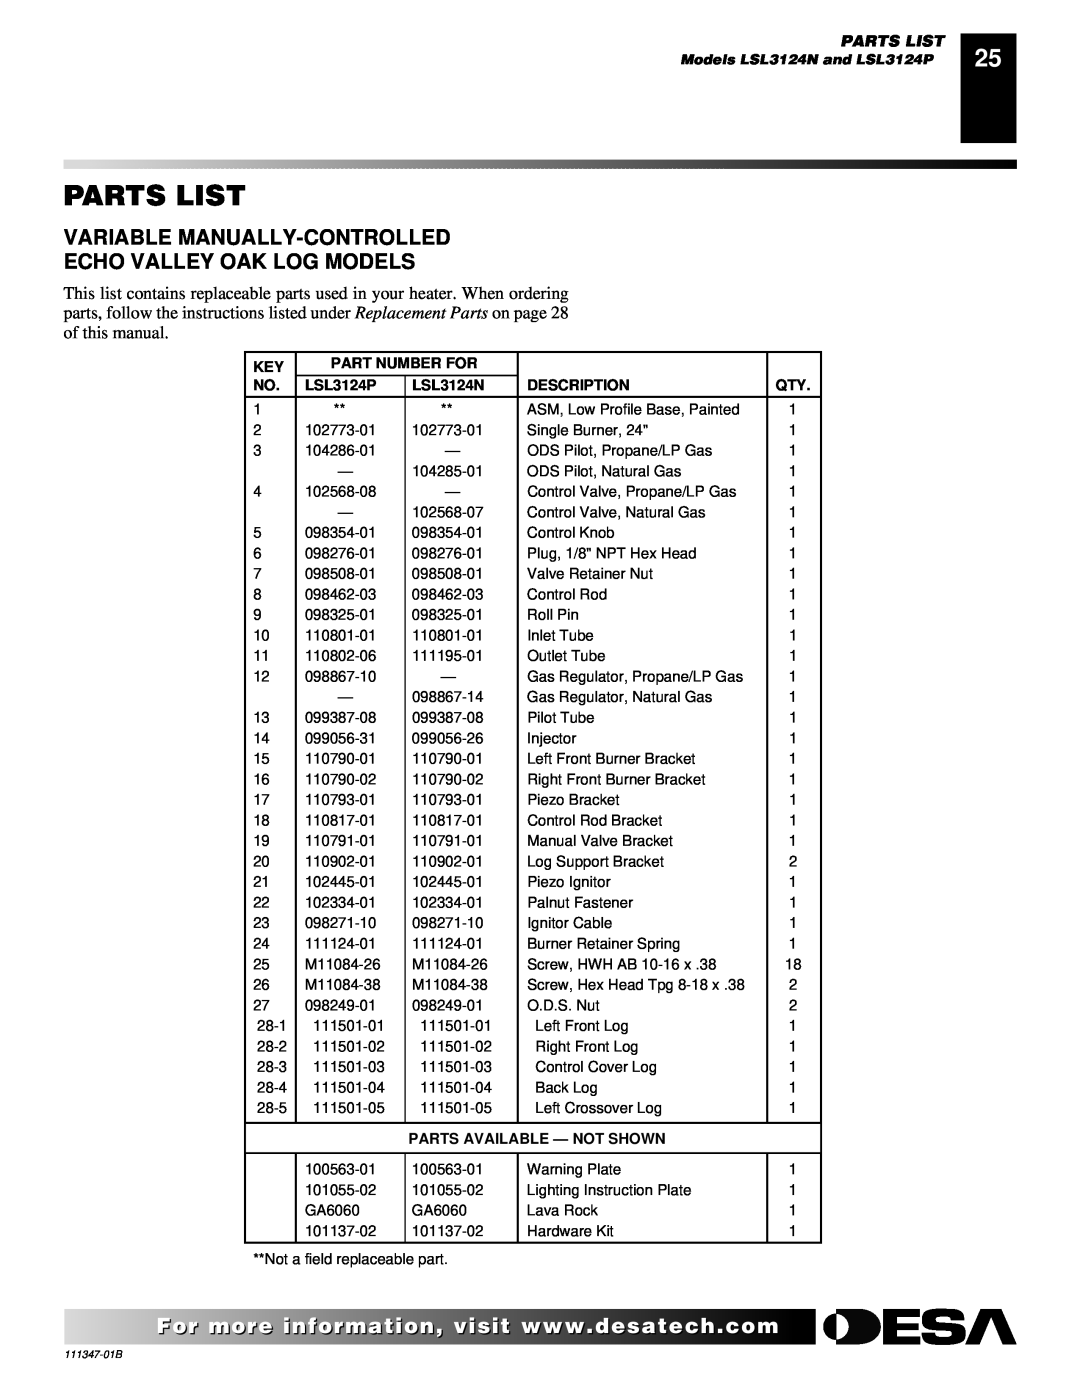 Desa Parts List, Variable Manually-Controlled, Echo Valley Oak Log Models, Models LSL3124N and LSL3124P, Description 